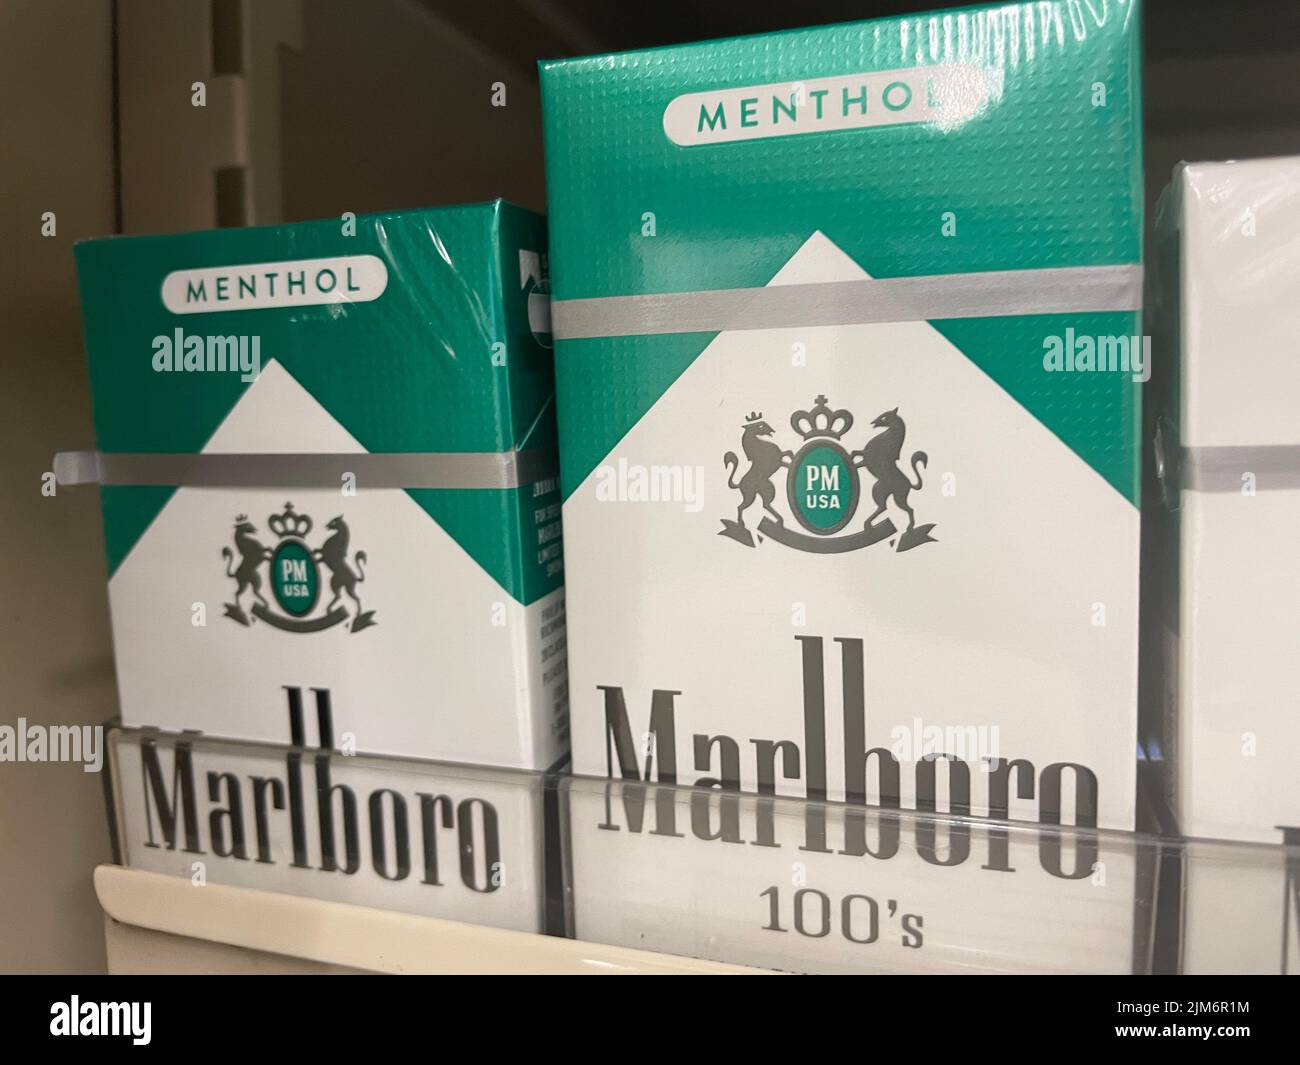 Augusta, Ga USA - 04 29 22: Retail store cigarettes Marlboro menthol variety Stock Photo